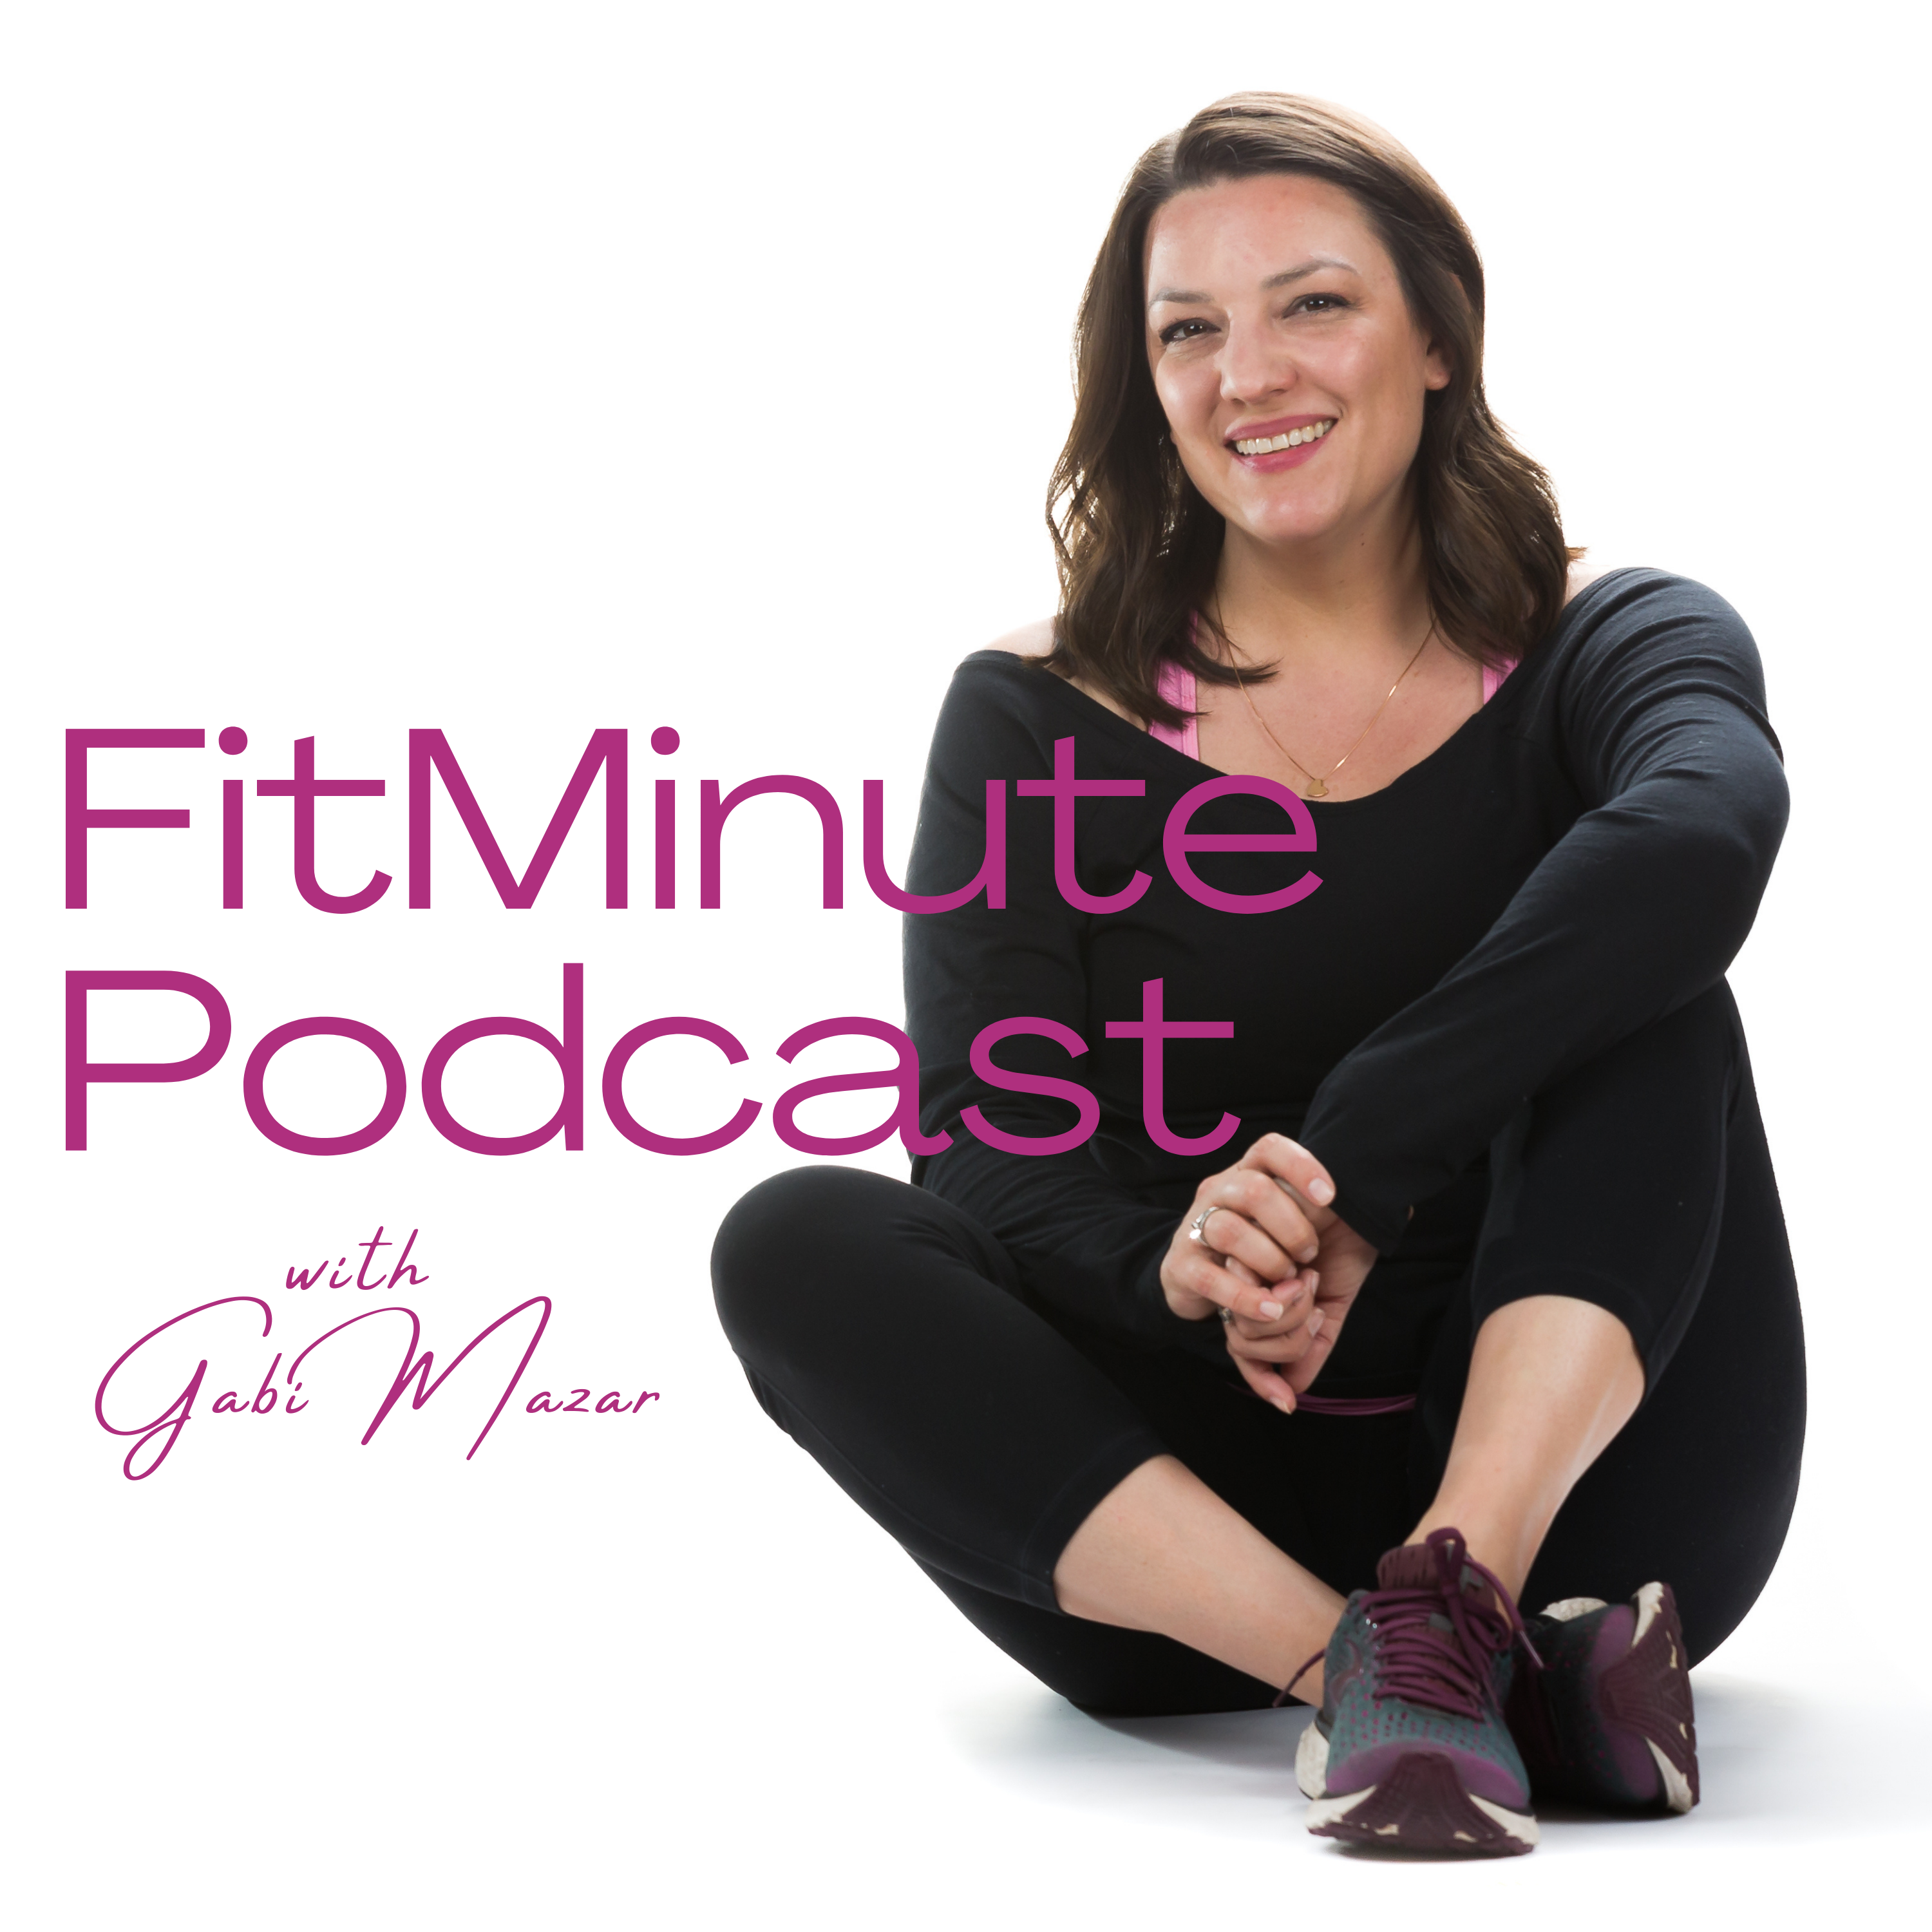 FitMinute Podcast with Gabi Mazar